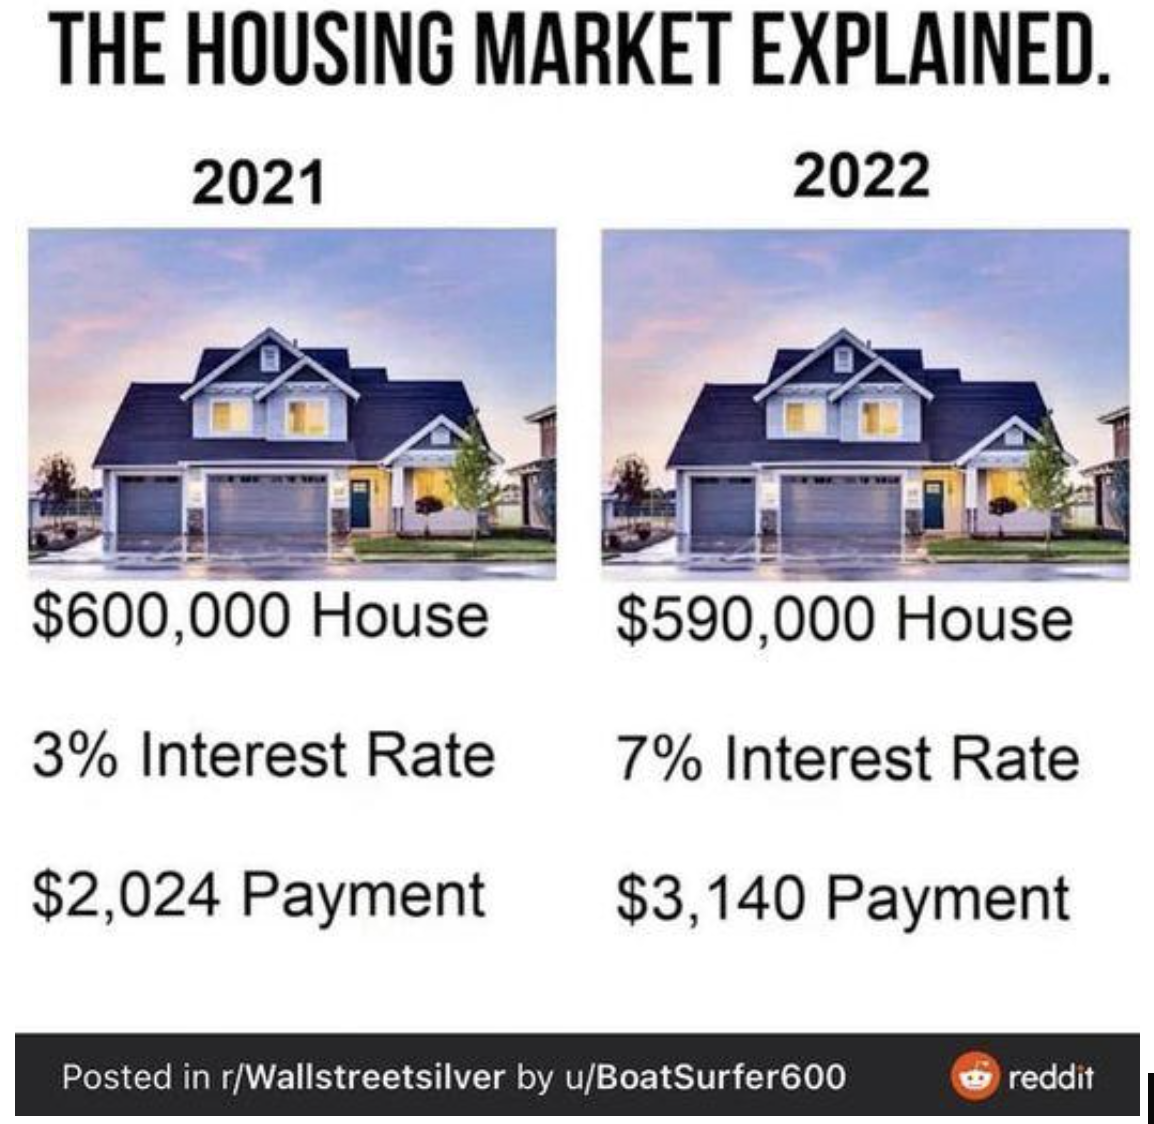 Meme σχετικά με το κόστος στέγασης το 2021-2022